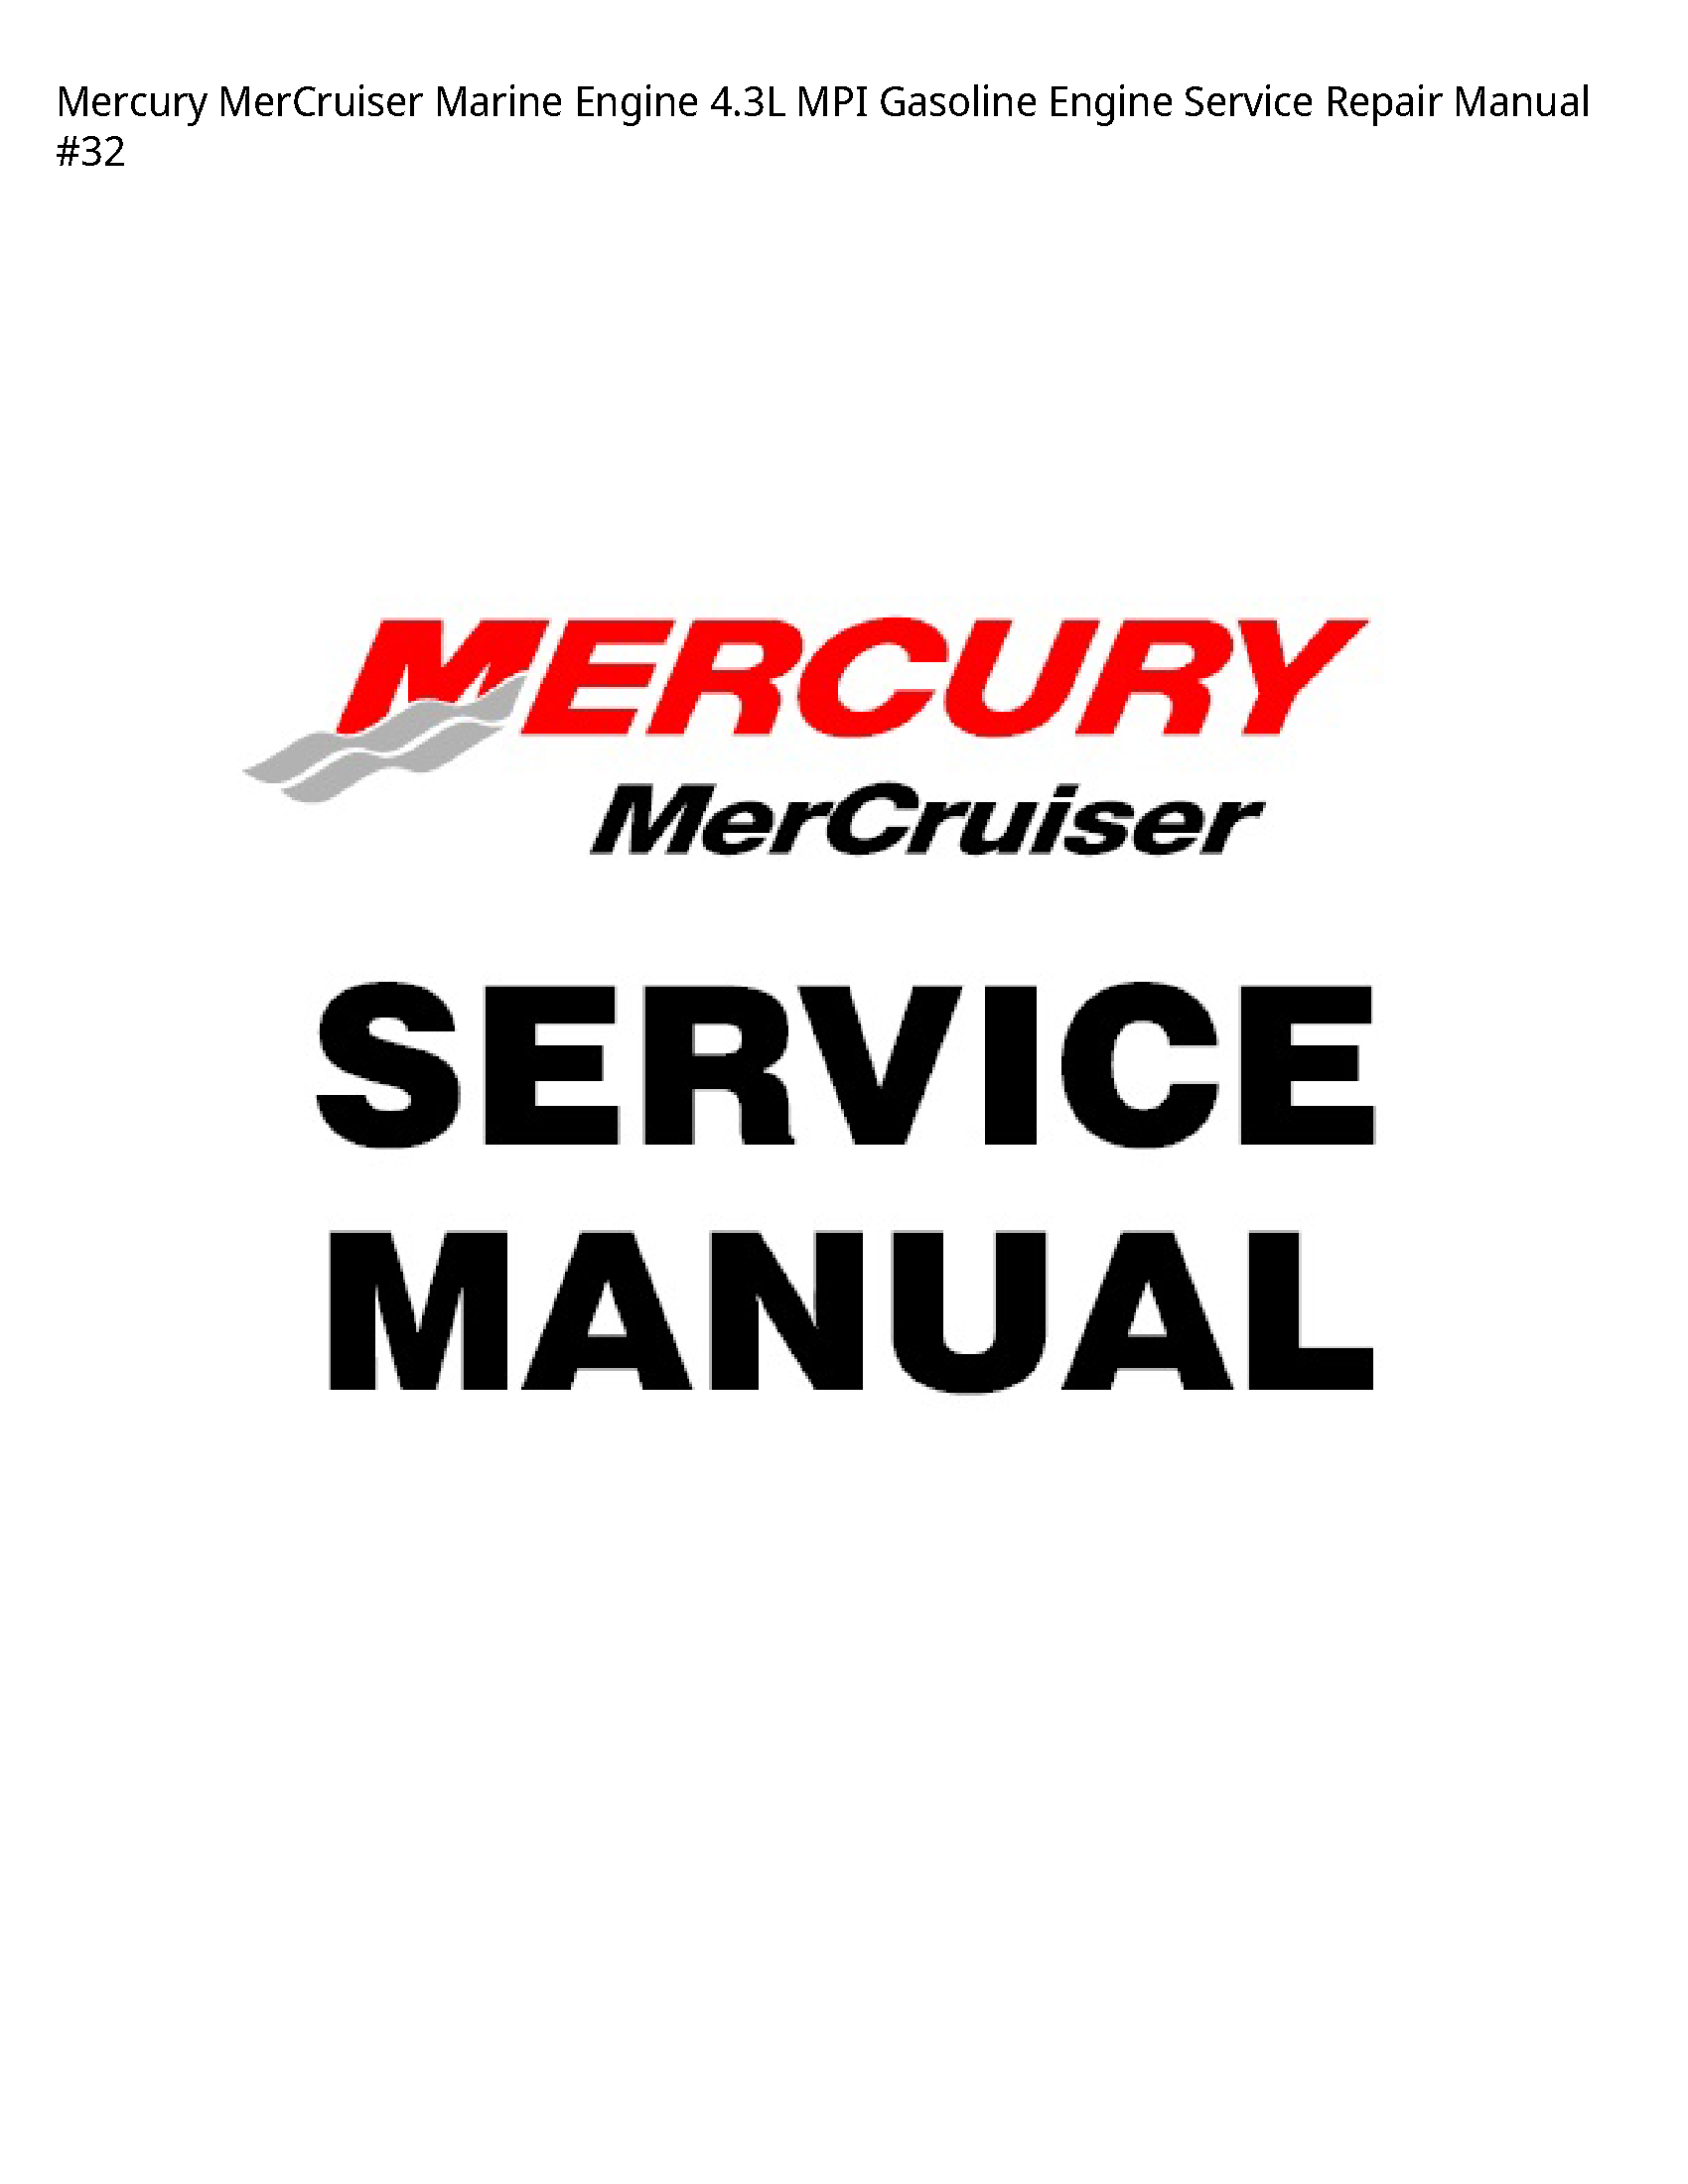 Mercury 4.3L MerCruiser Marine Engine MPI Gasoline Engine manual